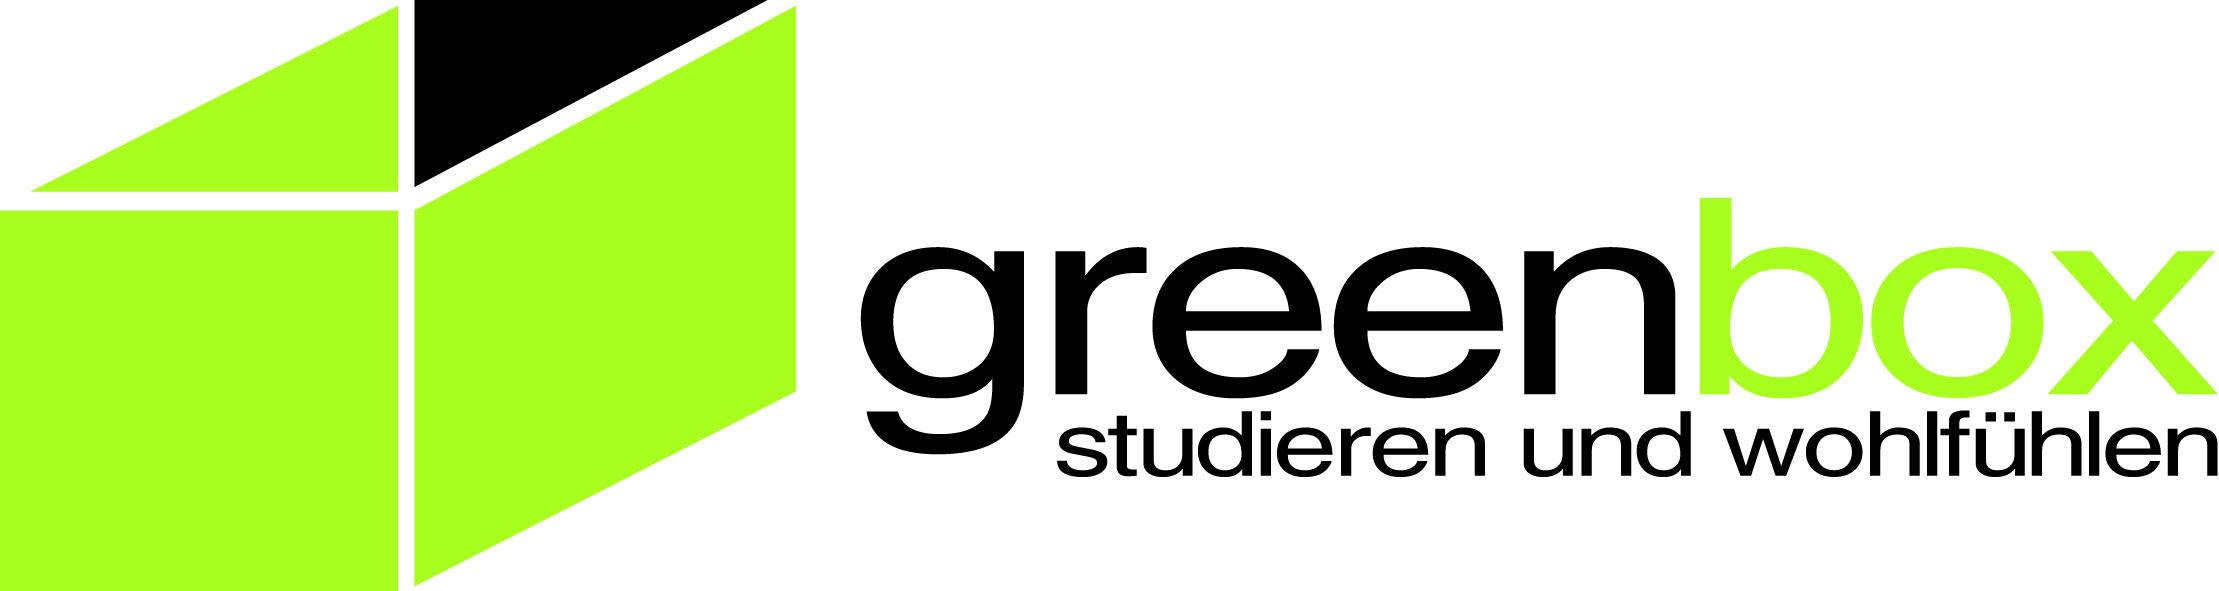 Greenbox Studentenheime